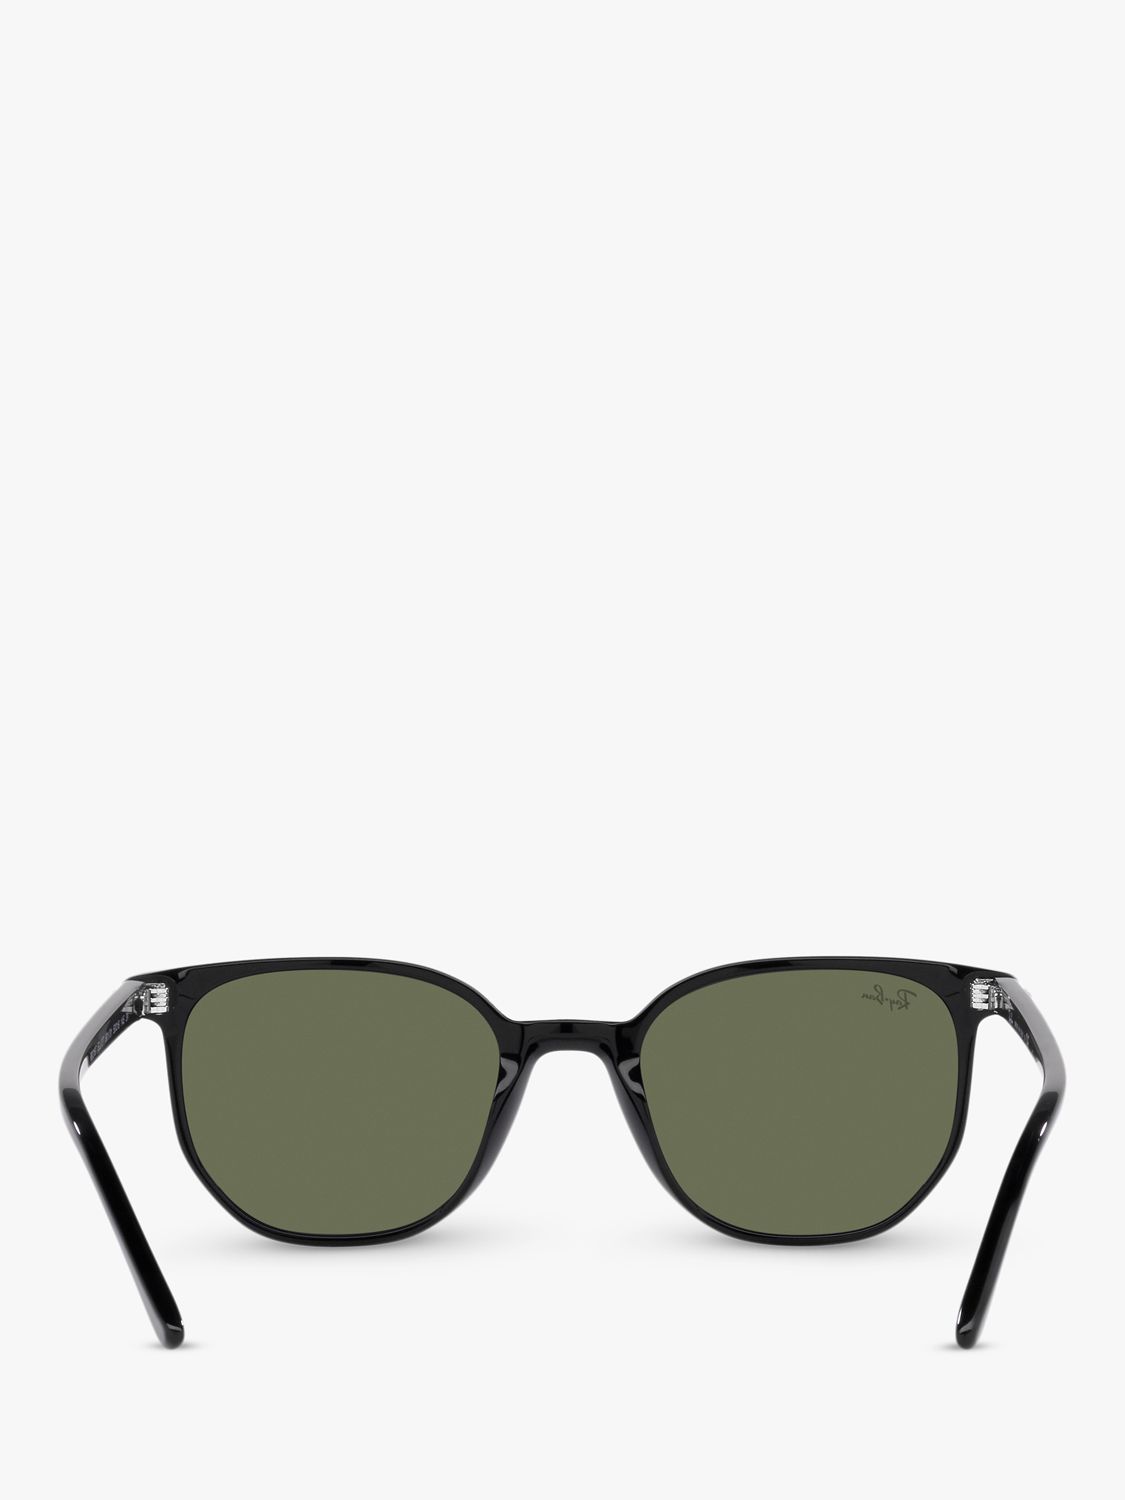 Buy Ray-Ban RB2197 Unisex Elliot Sunglasses, Black/Green Online at johnlewis.com